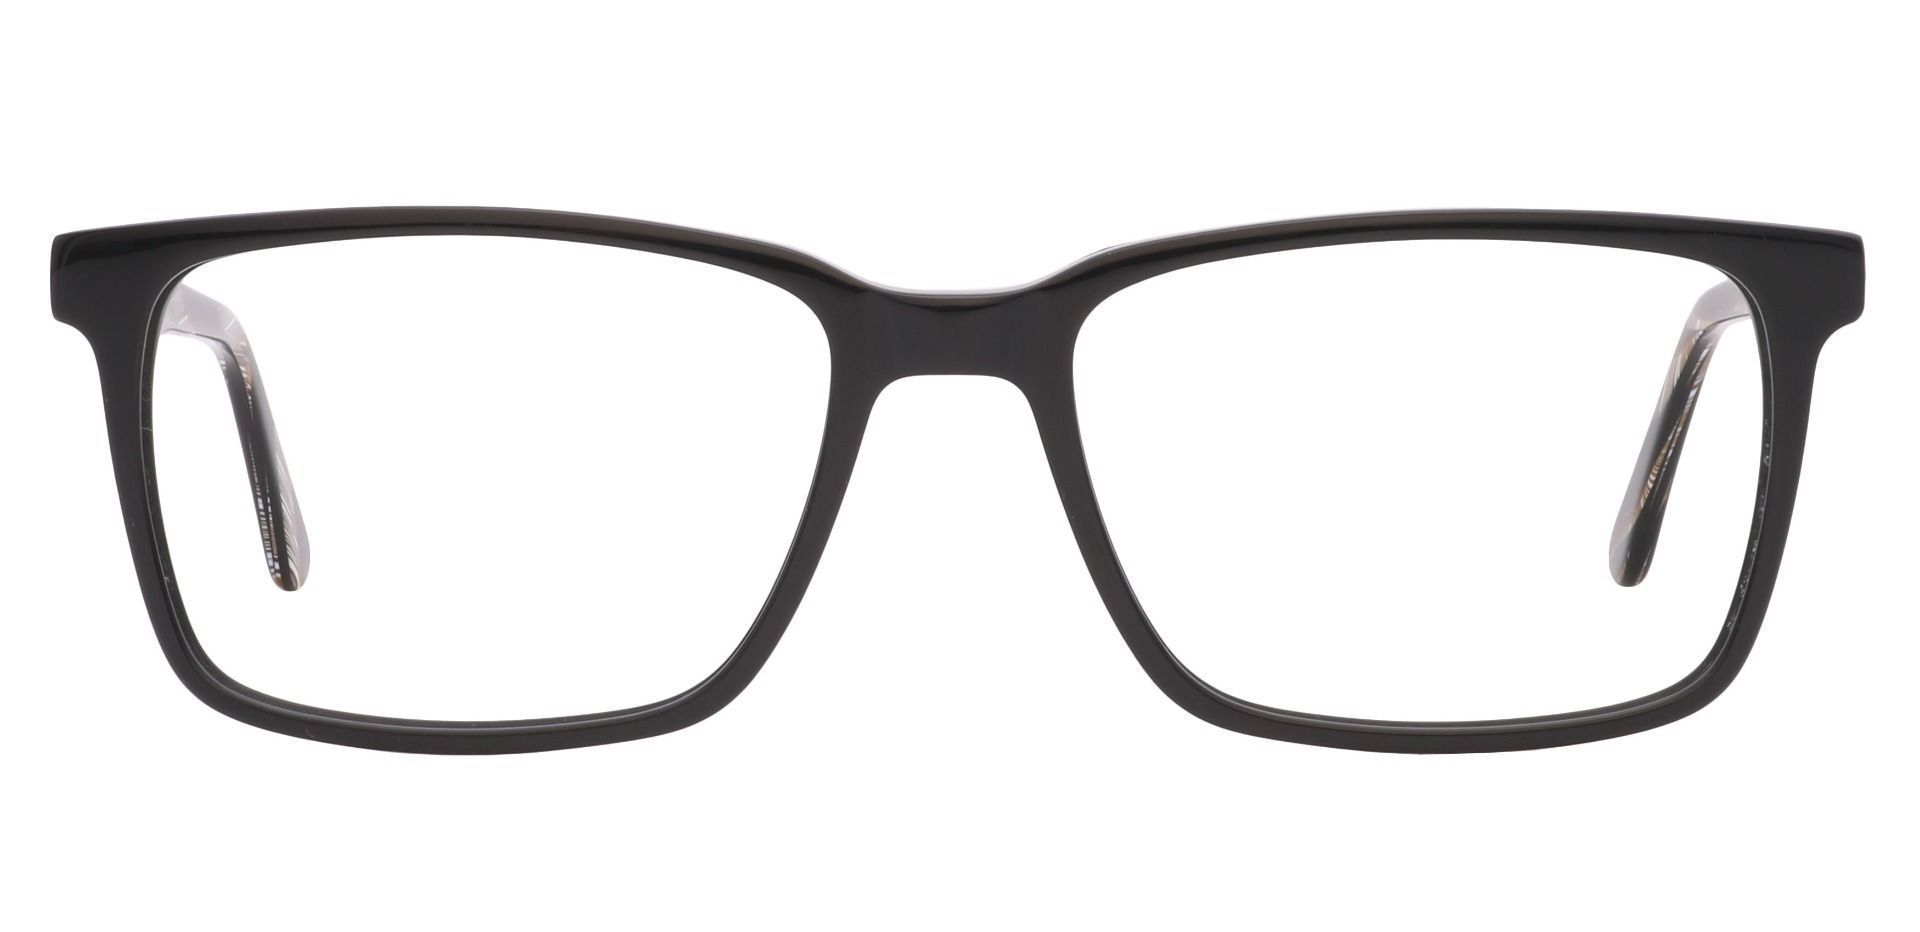 Venice Rectangle Lined Bifocal Glasses - Black